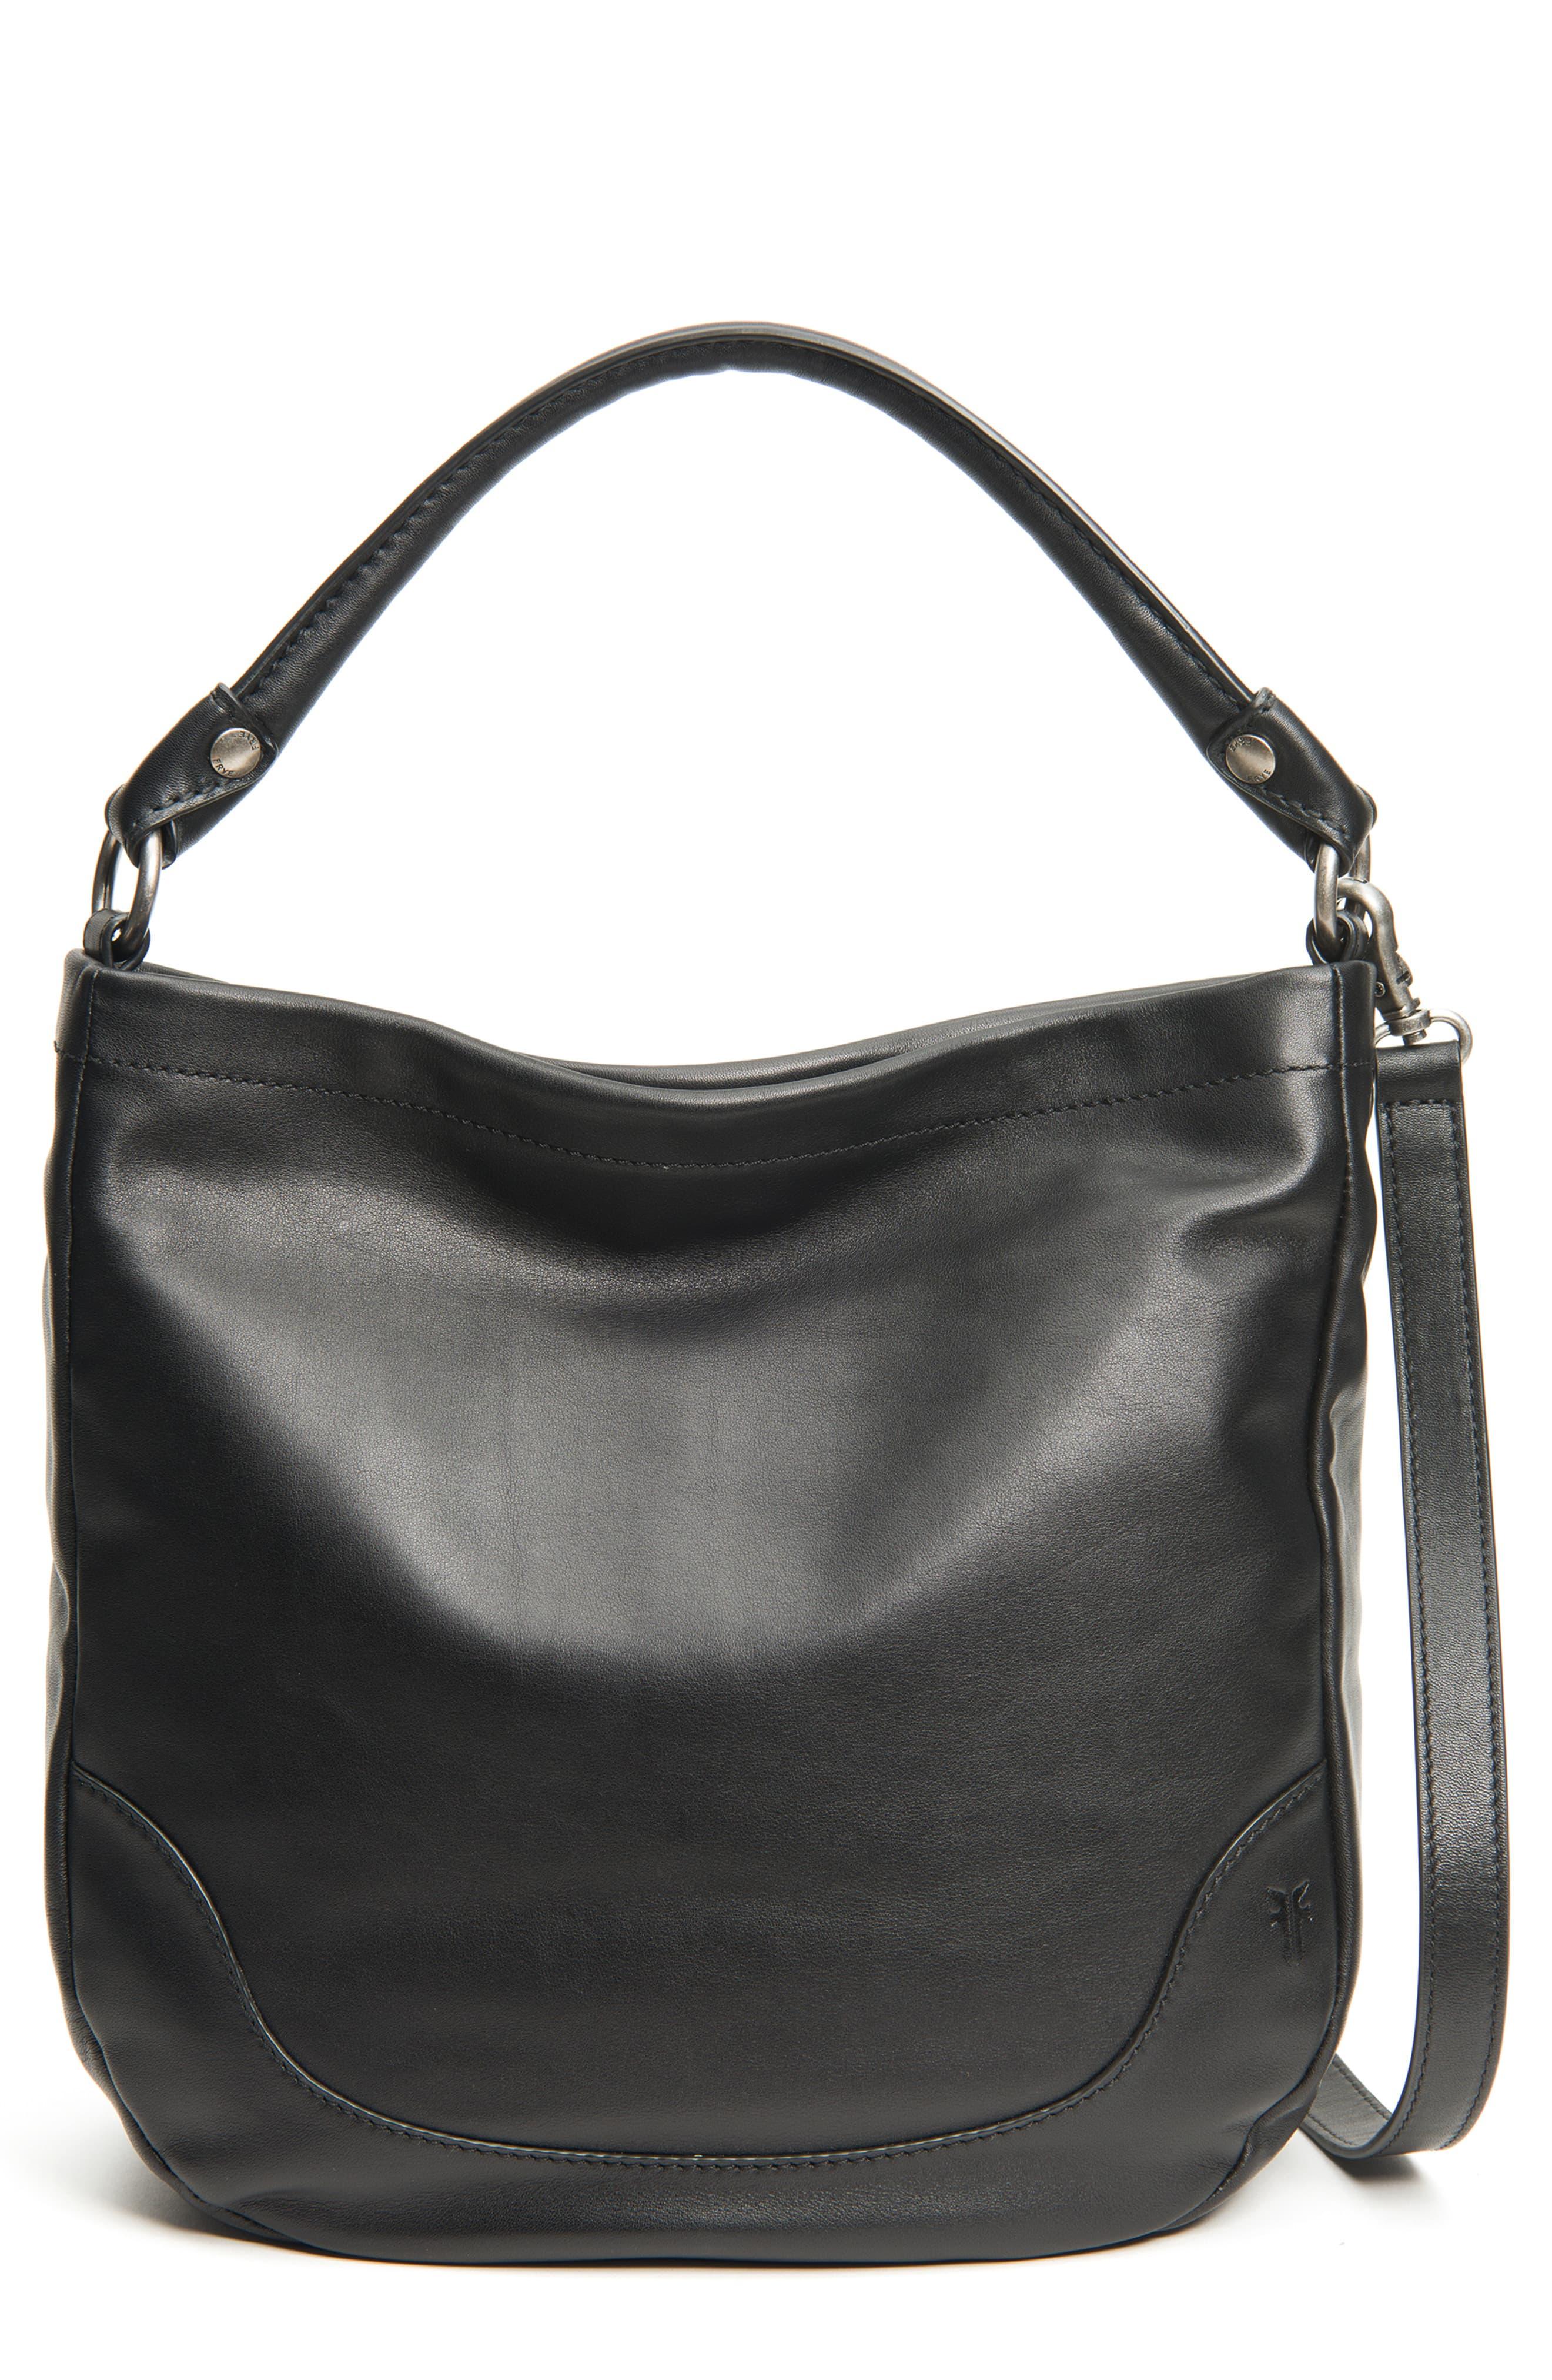 Frye Melissa Leather Hobo Bag in Black - Lyst